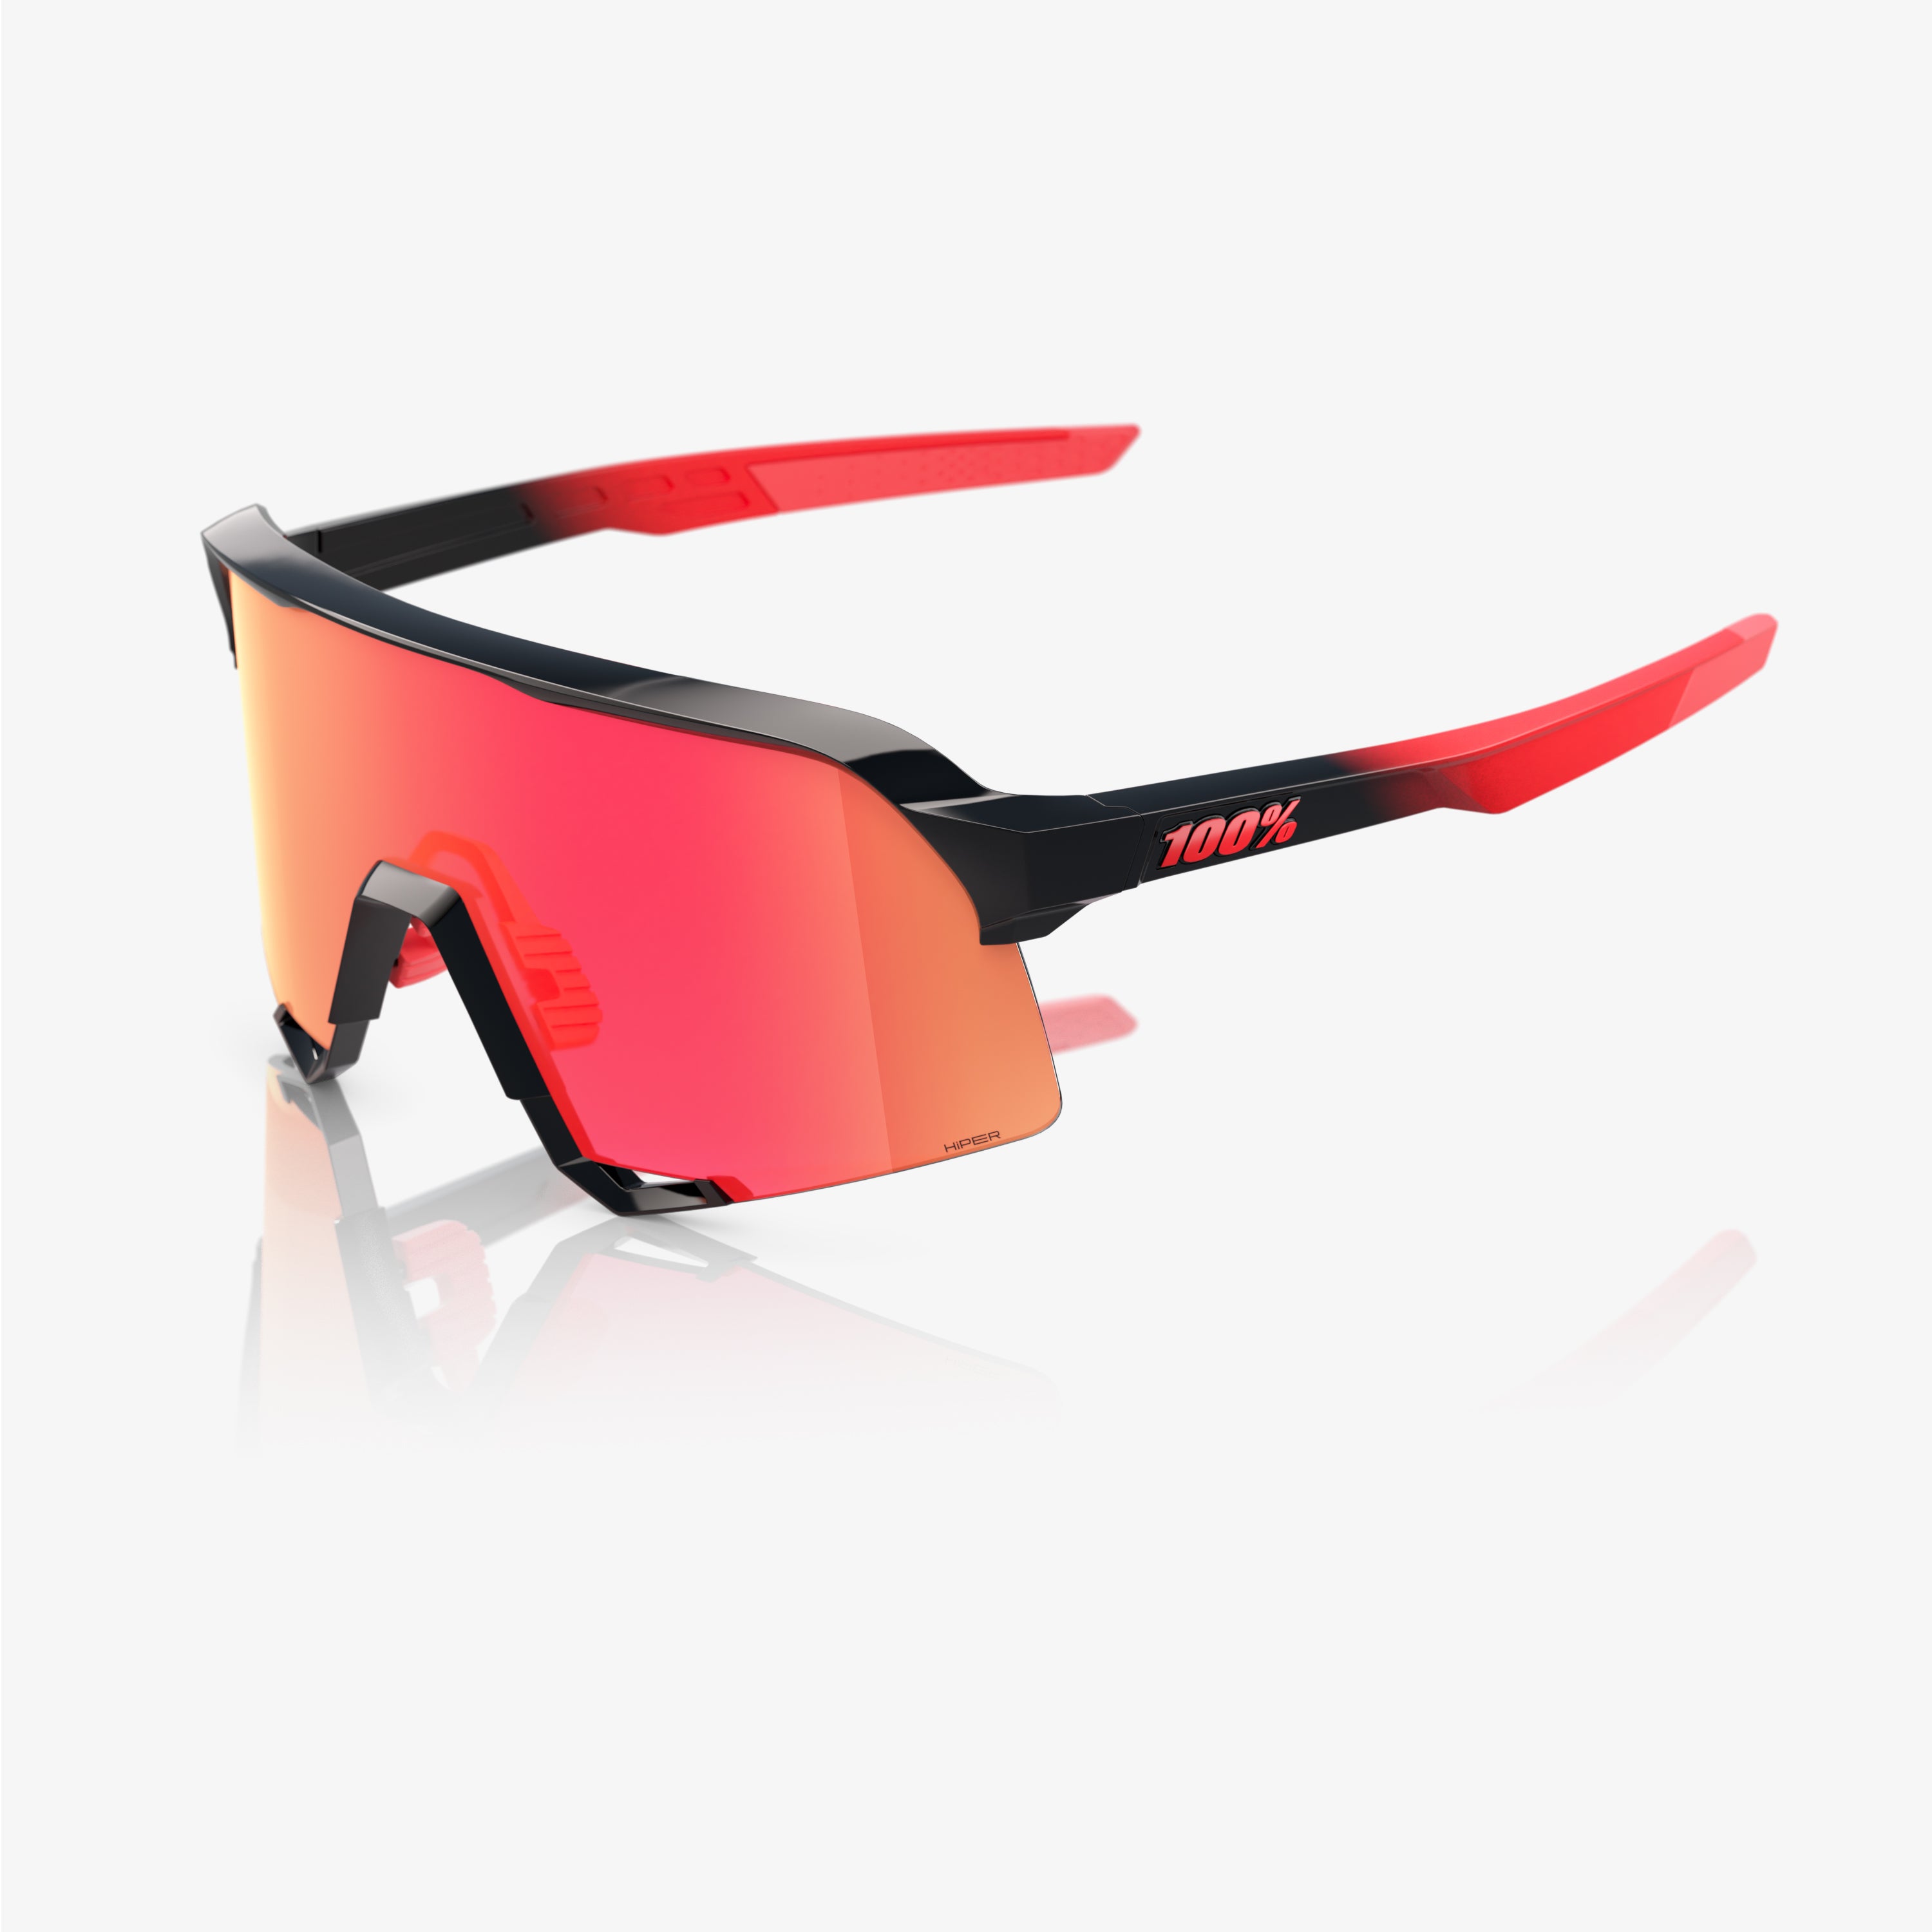 S3 Bike Glasses for Cycling and Mountain Biking - Sport ...